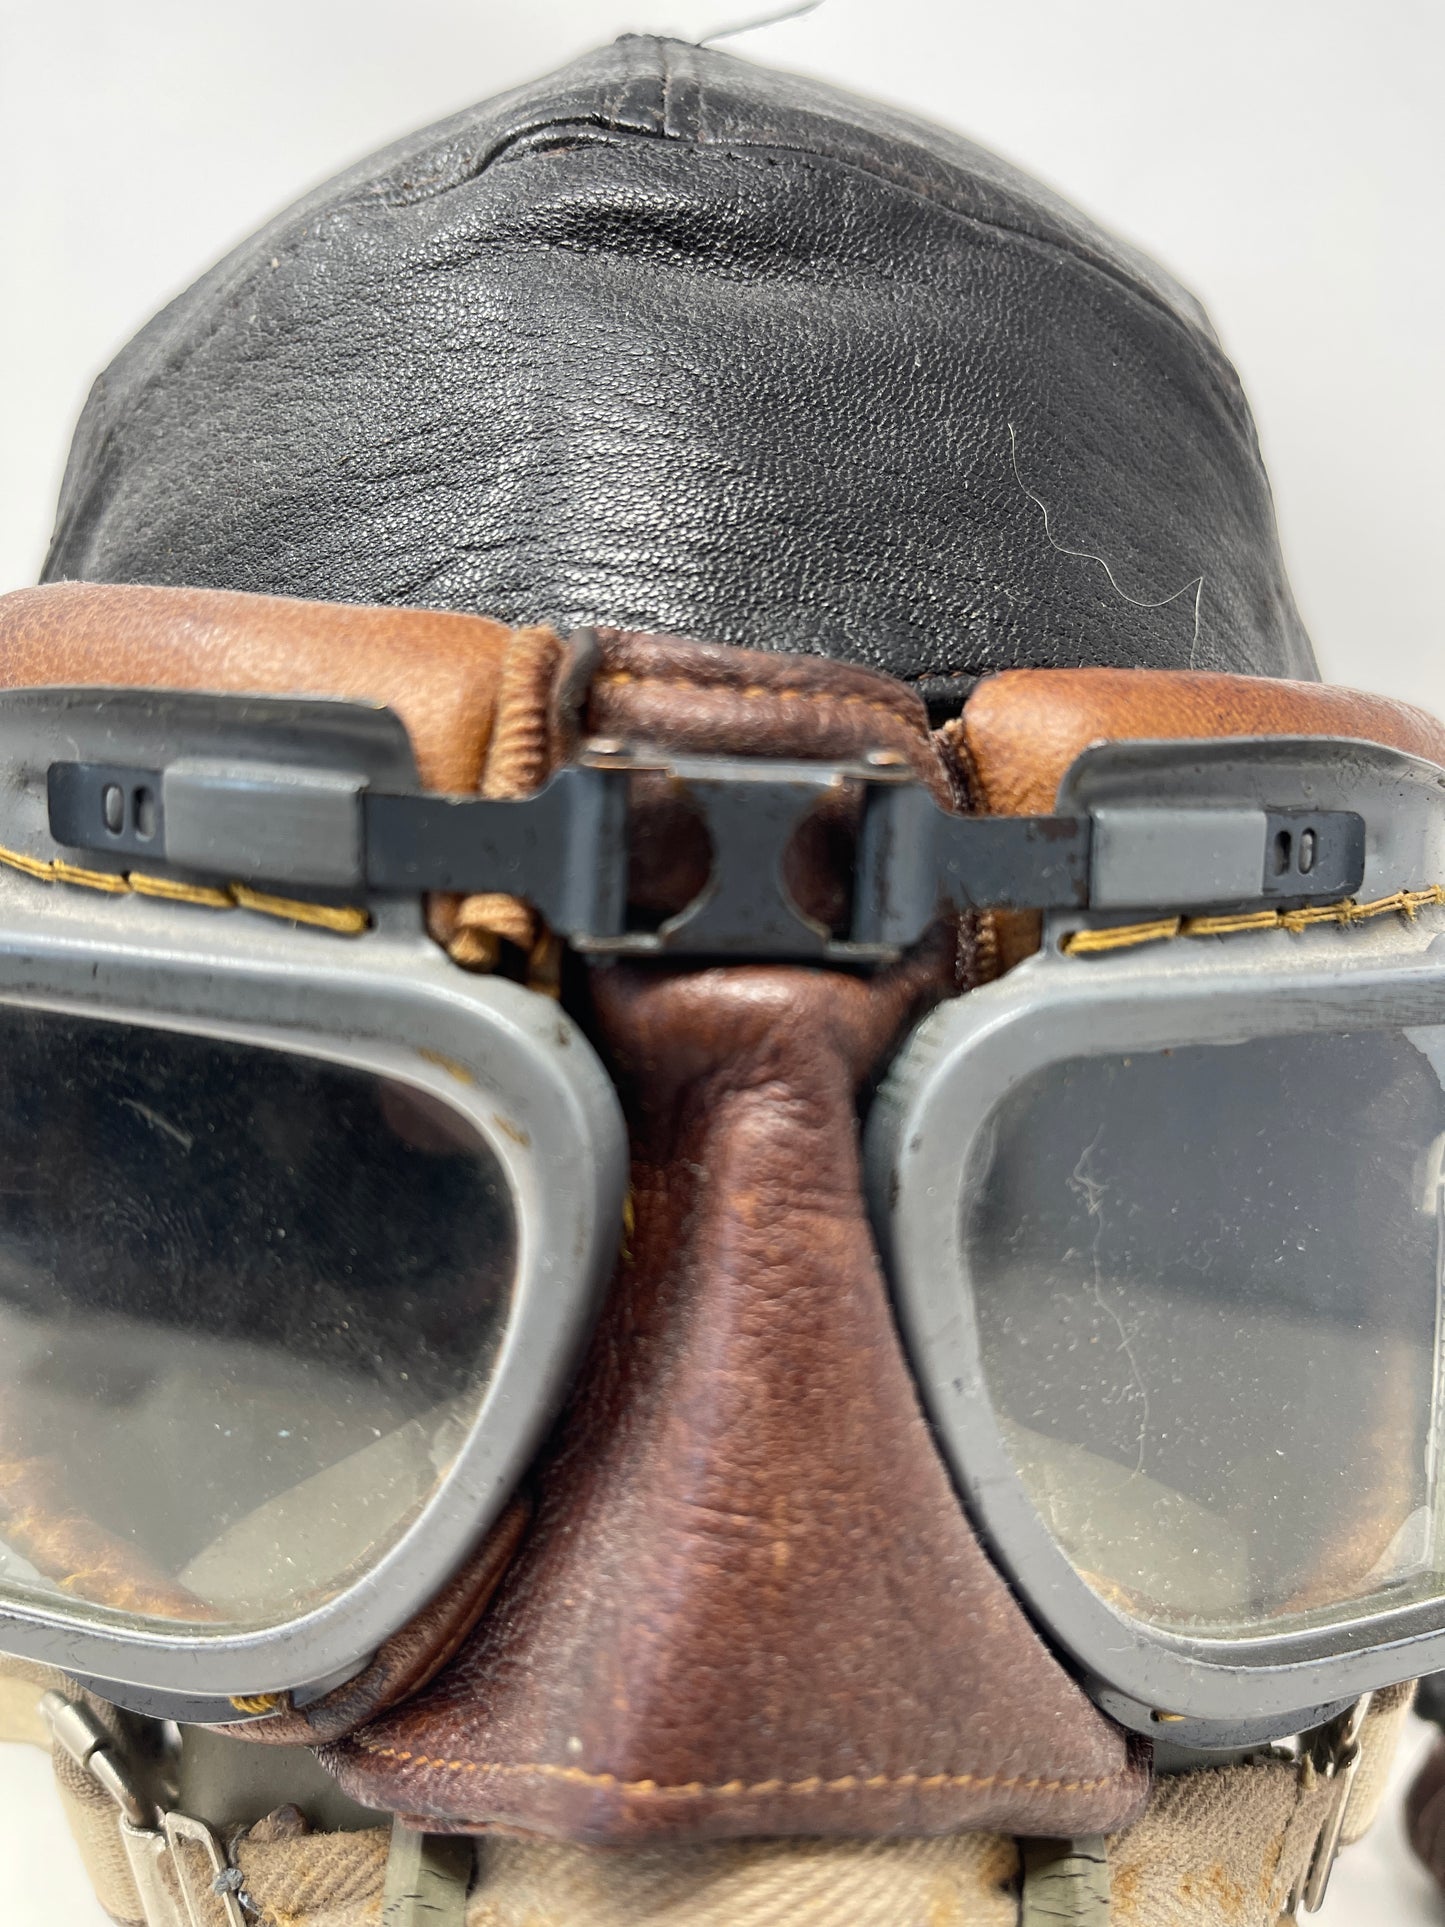 Flying Helmet, Type C (wired), Goggles, Flying, Mk VIII